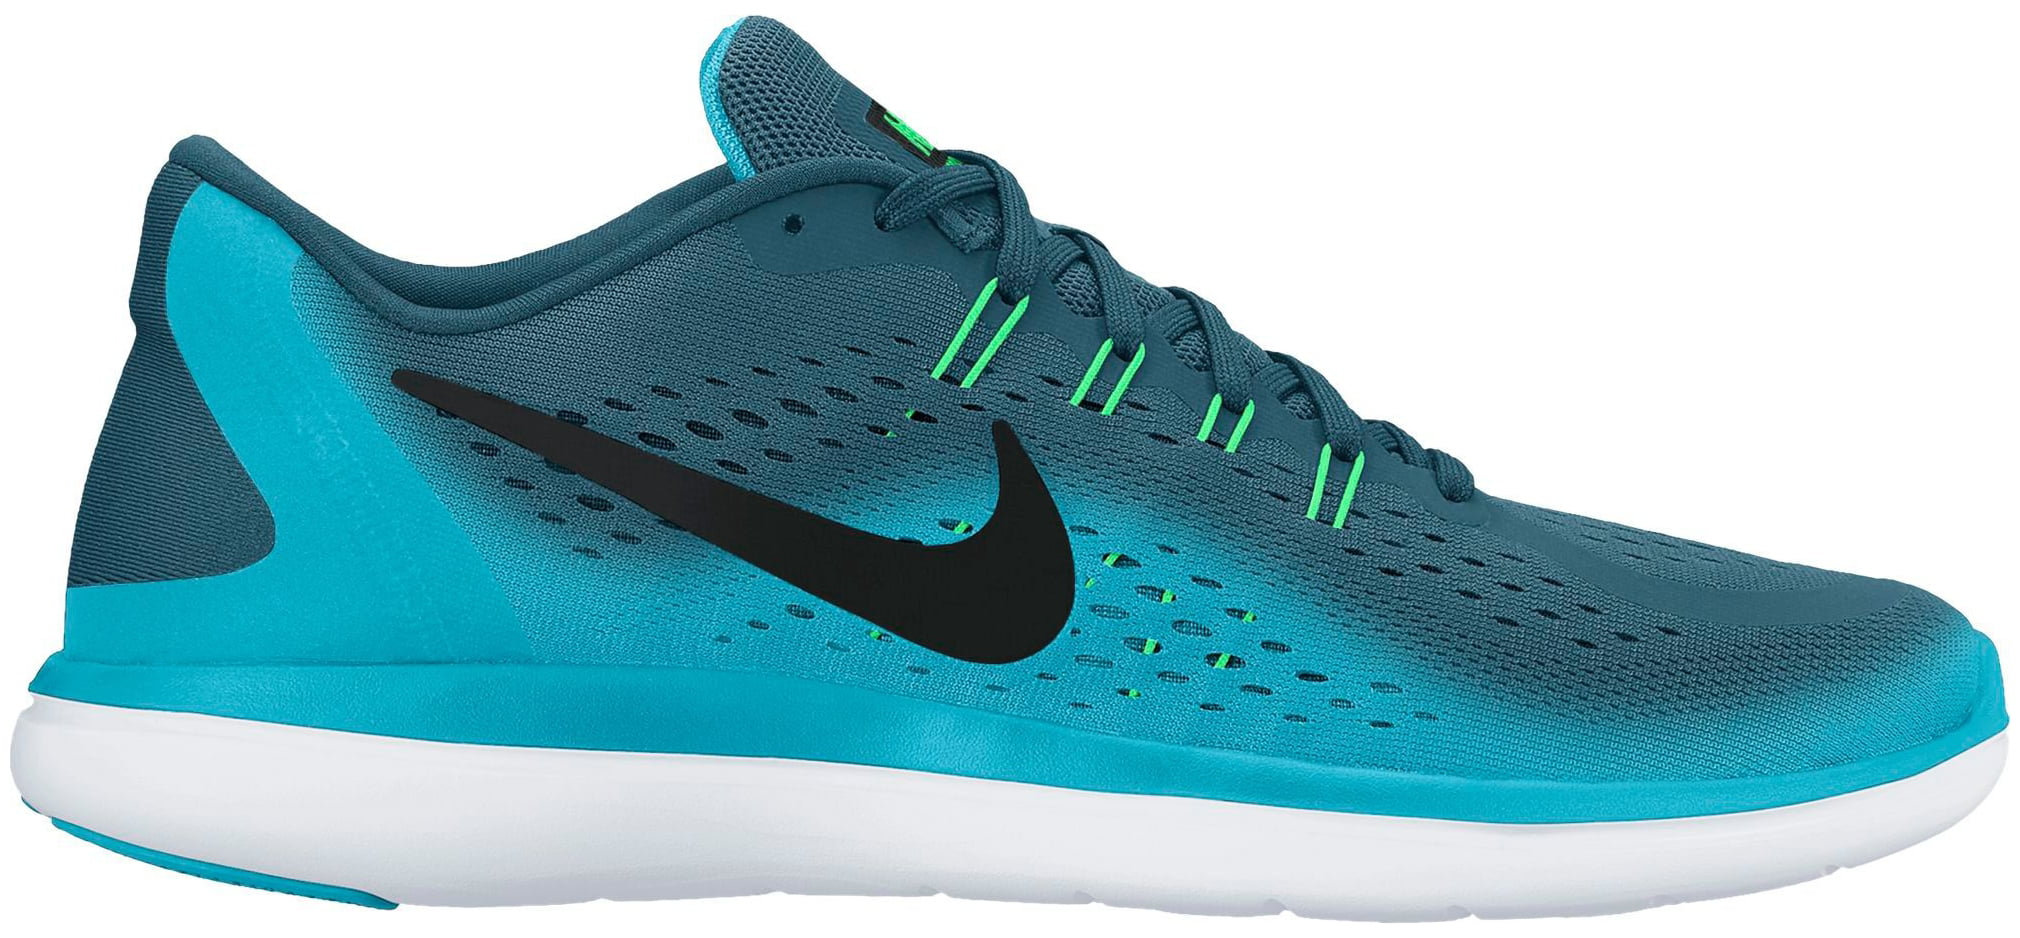 Nike Men's 2017 RN Running Shoes (Teal/Blue, 12) - Walmart.com